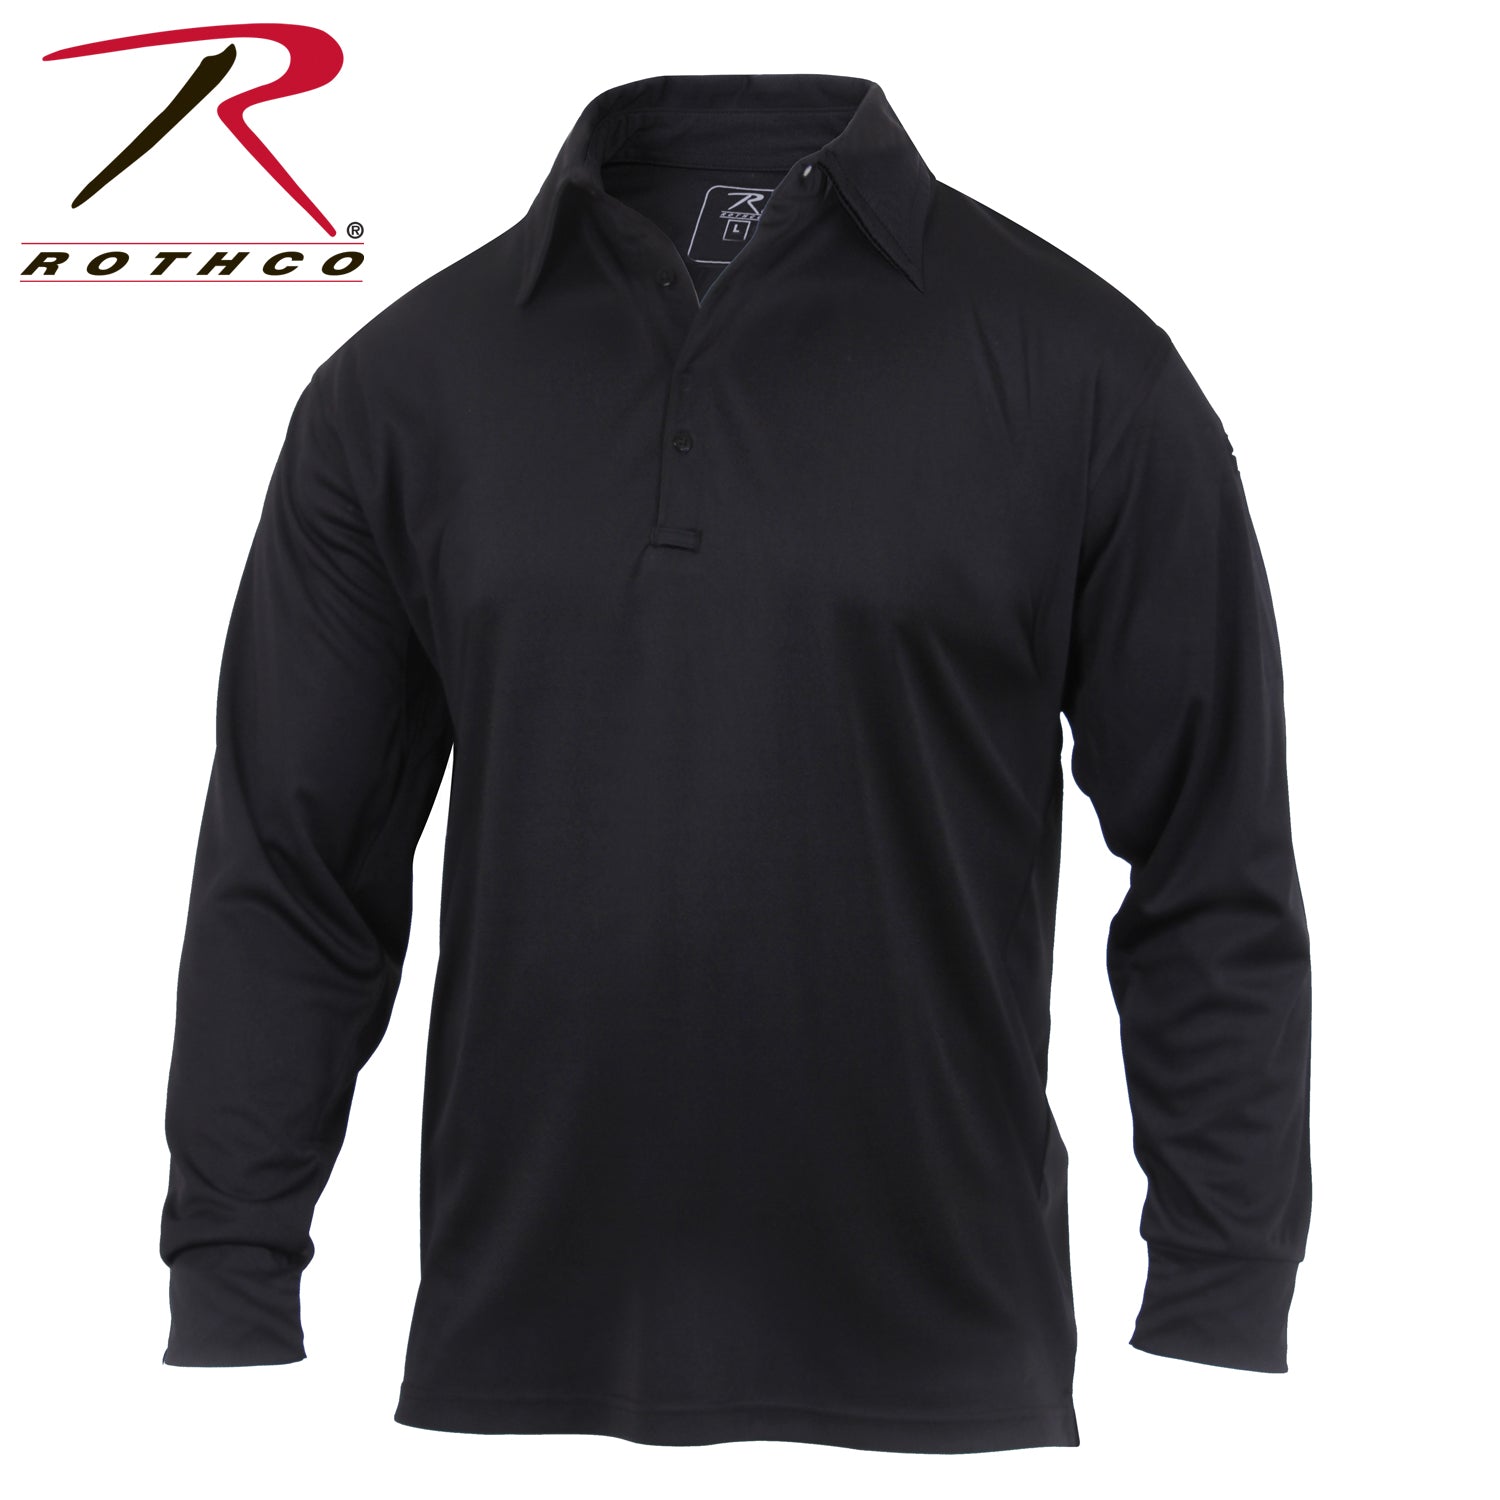 Rothco Long Sleeve Tactical Performance Polo